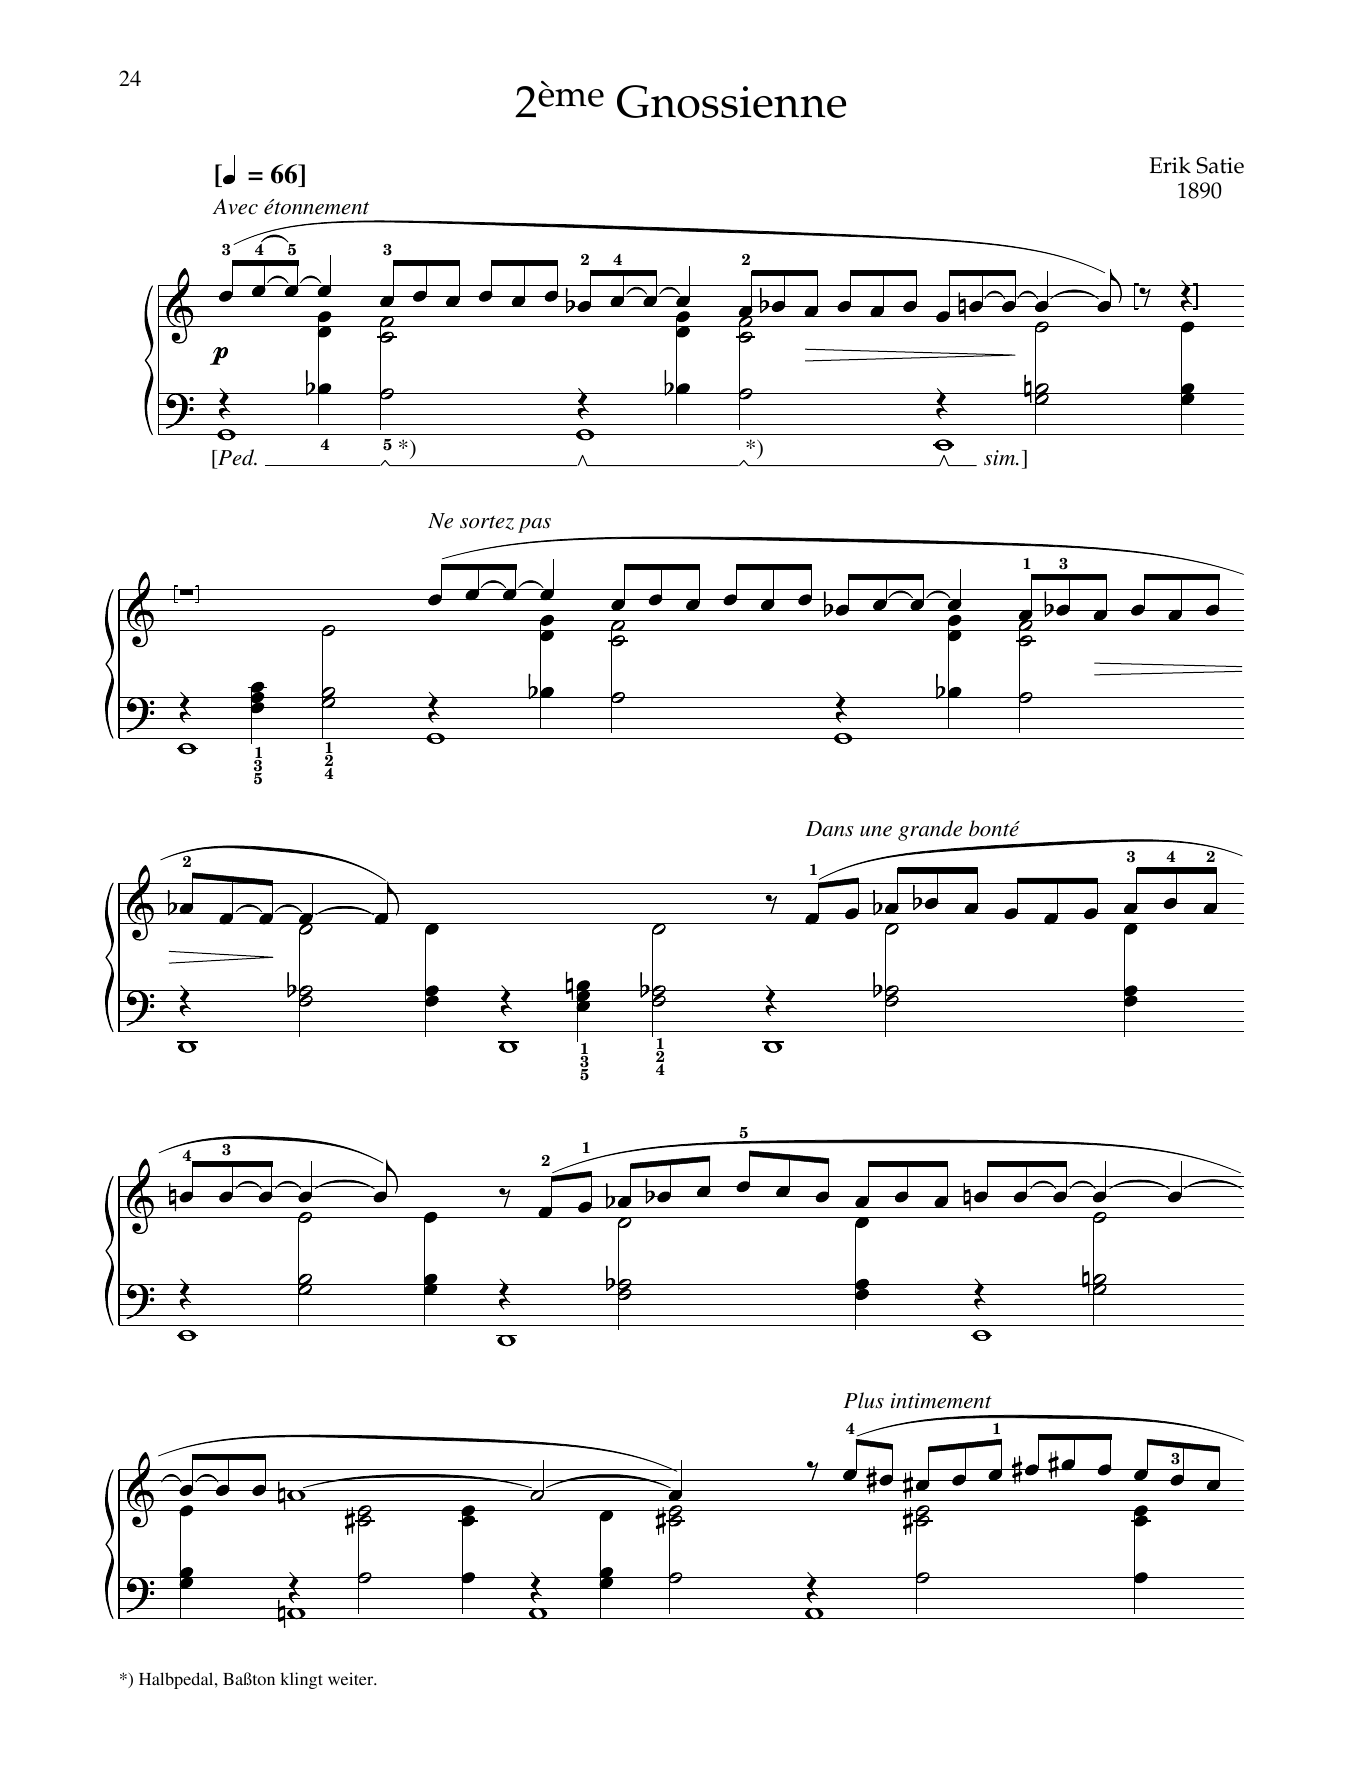 Erik Satie 2ème Gnossienne Sheet Music Notes & Chords for Piano Solo - Download or Print PDF